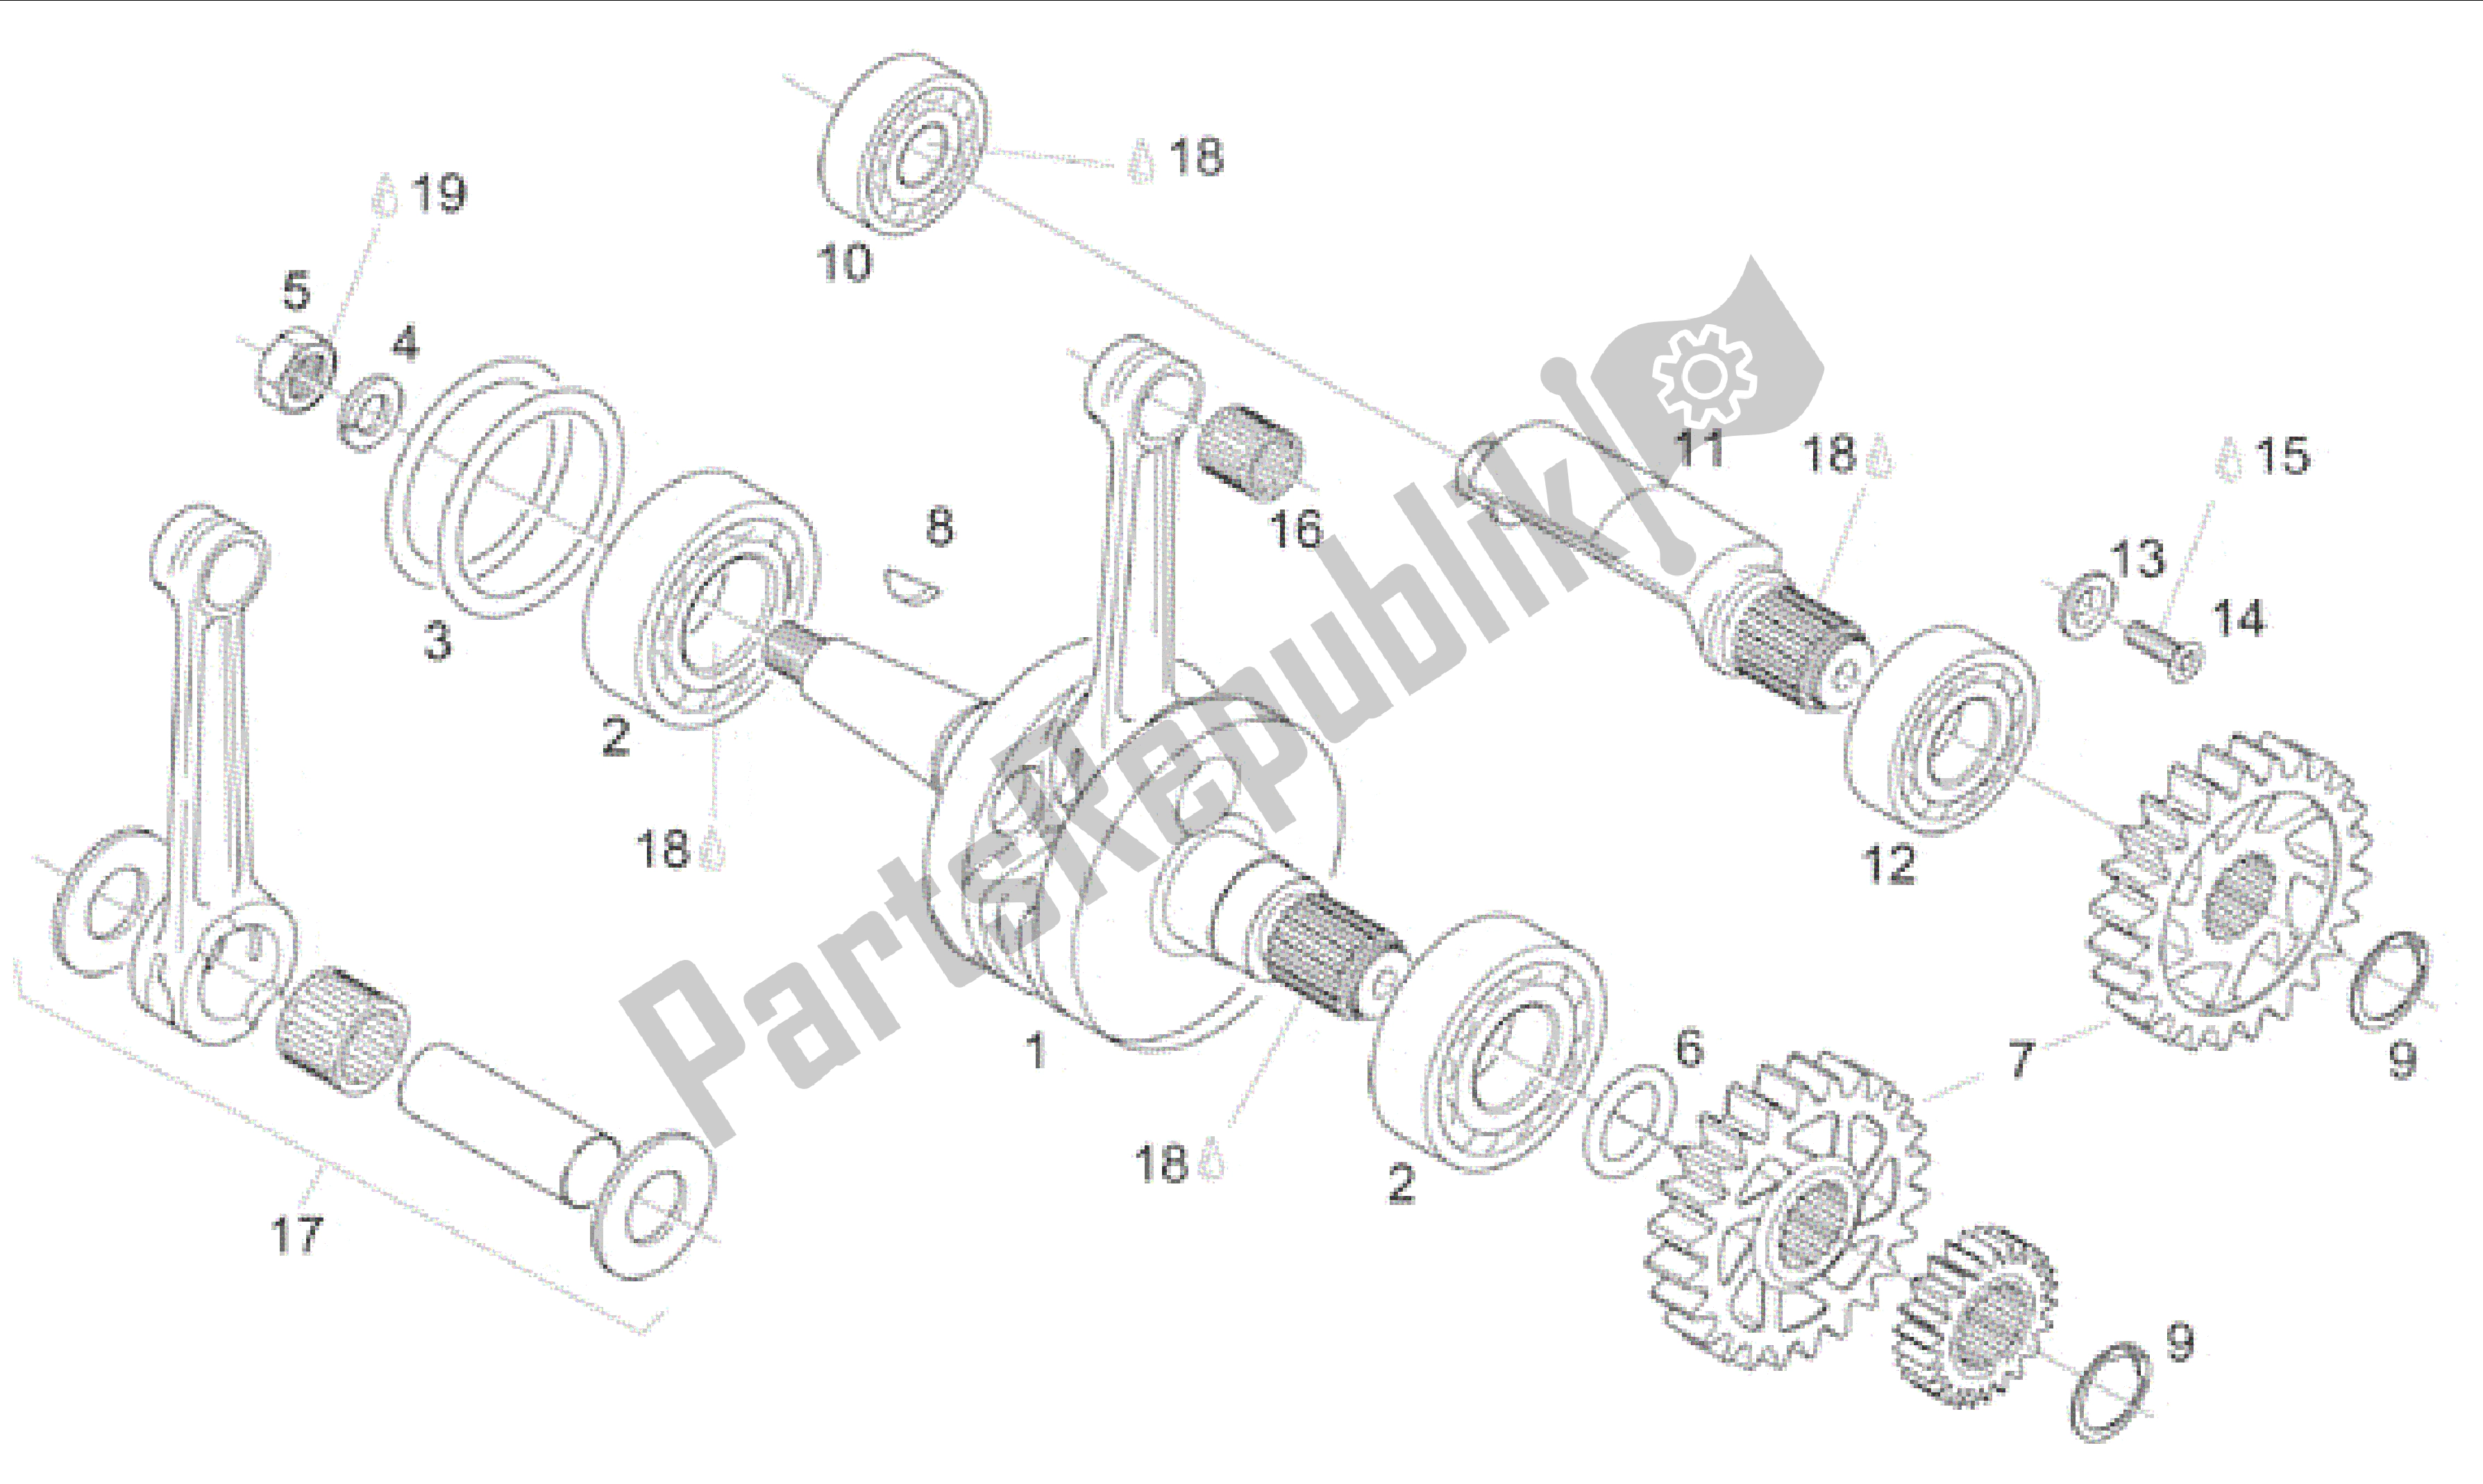 All parts for the Crankshaft - Balance Shaft of the Aprilia RX 125 1995 - 1998